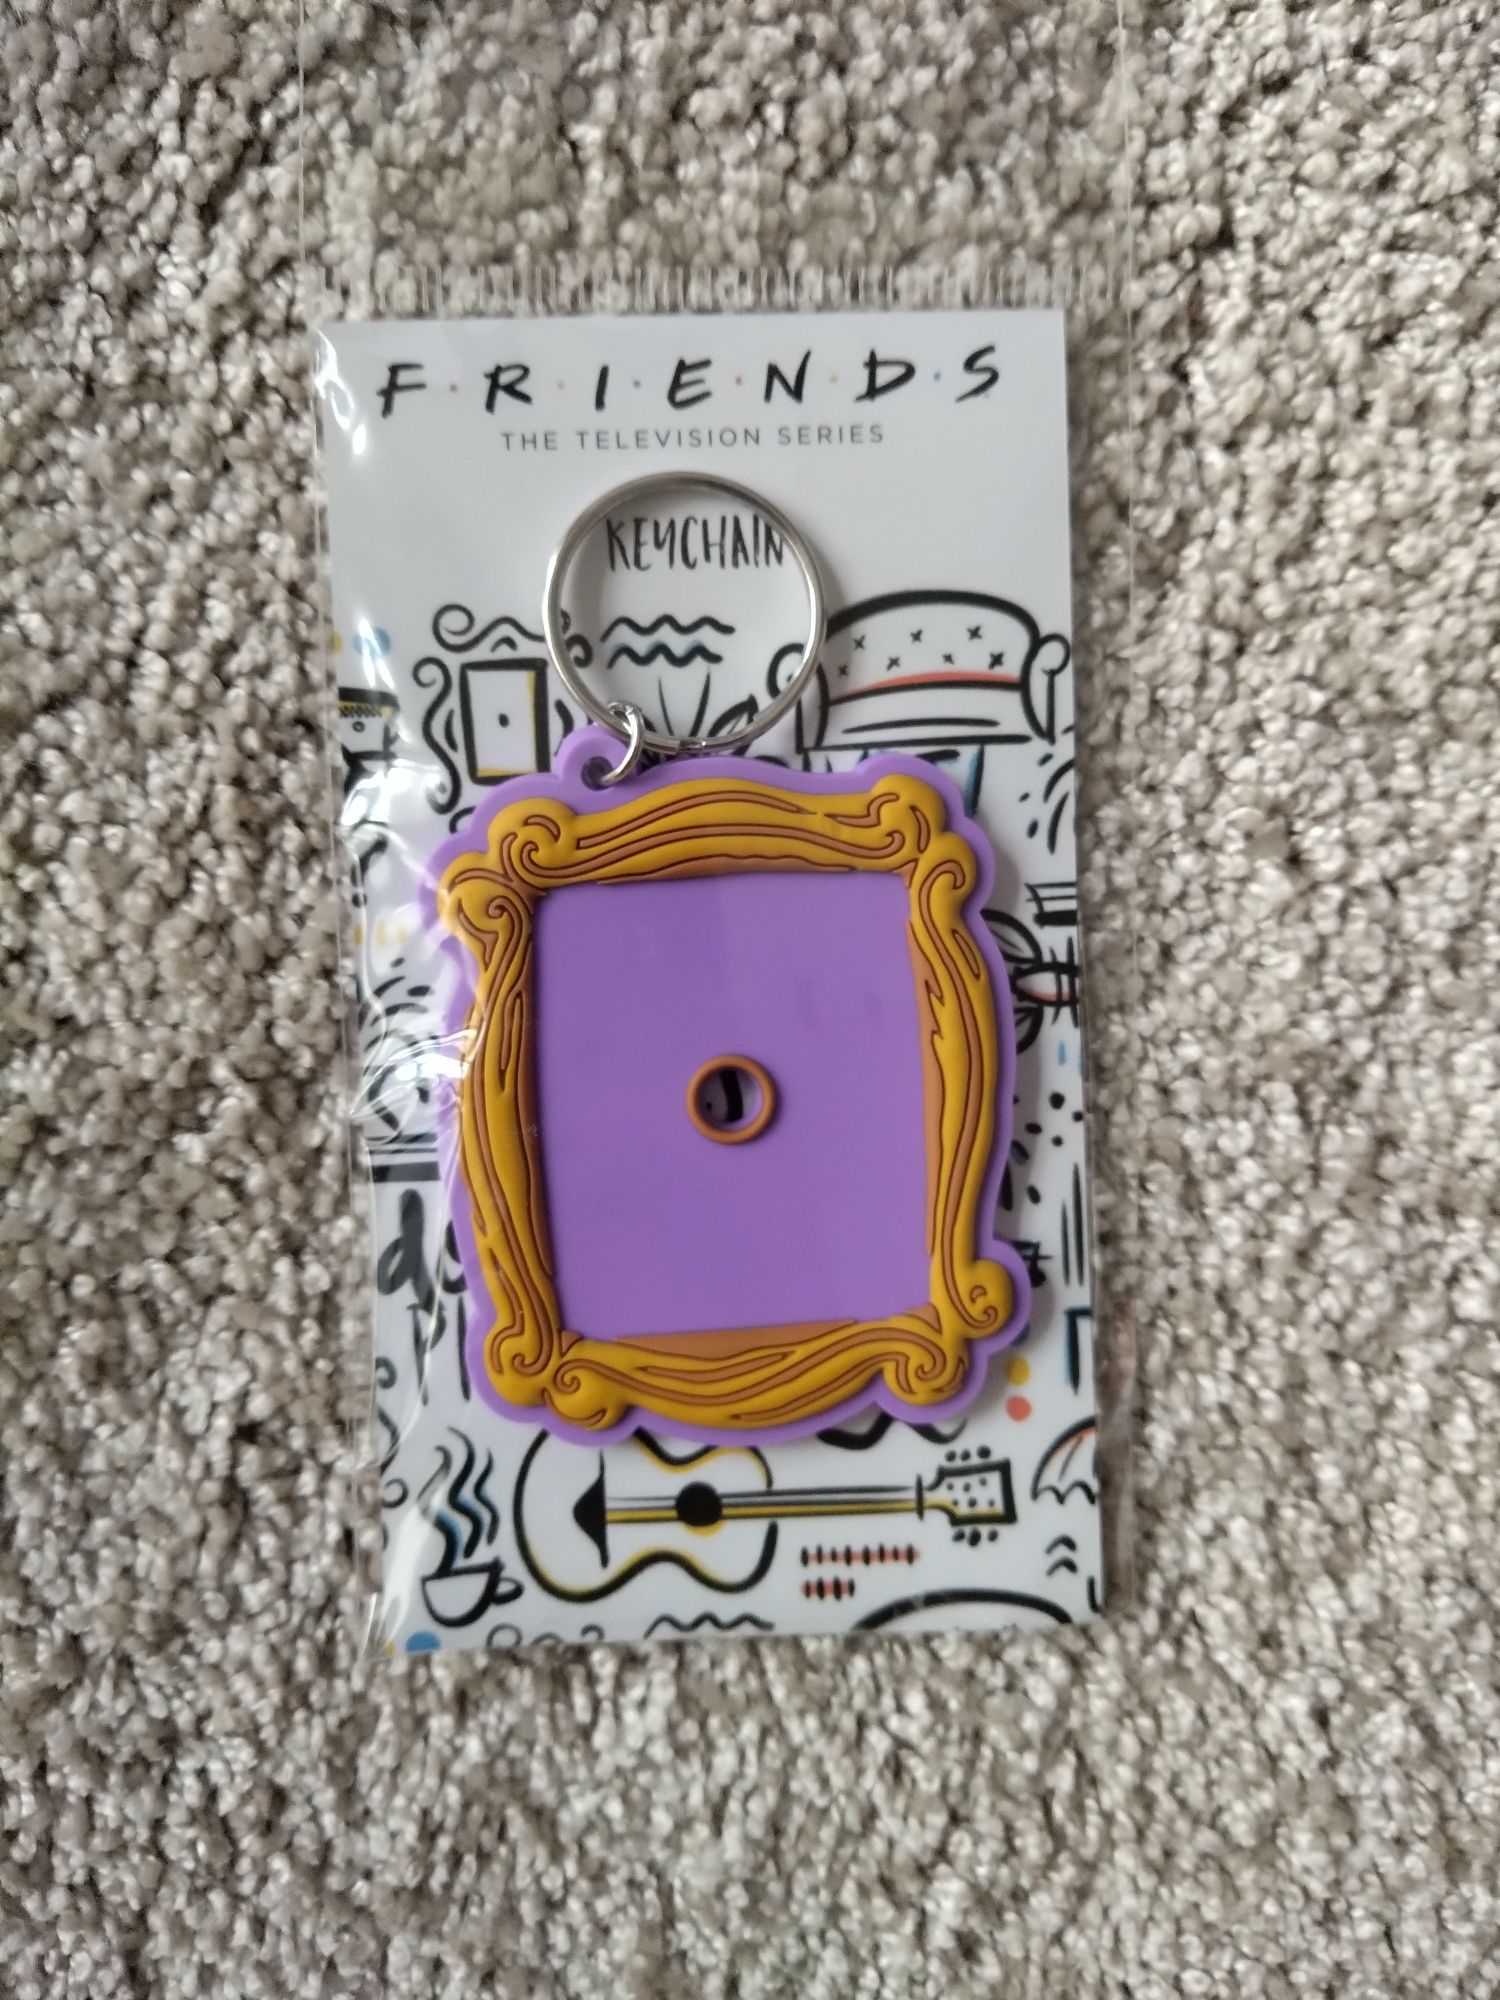 Porta chaves da série Friends